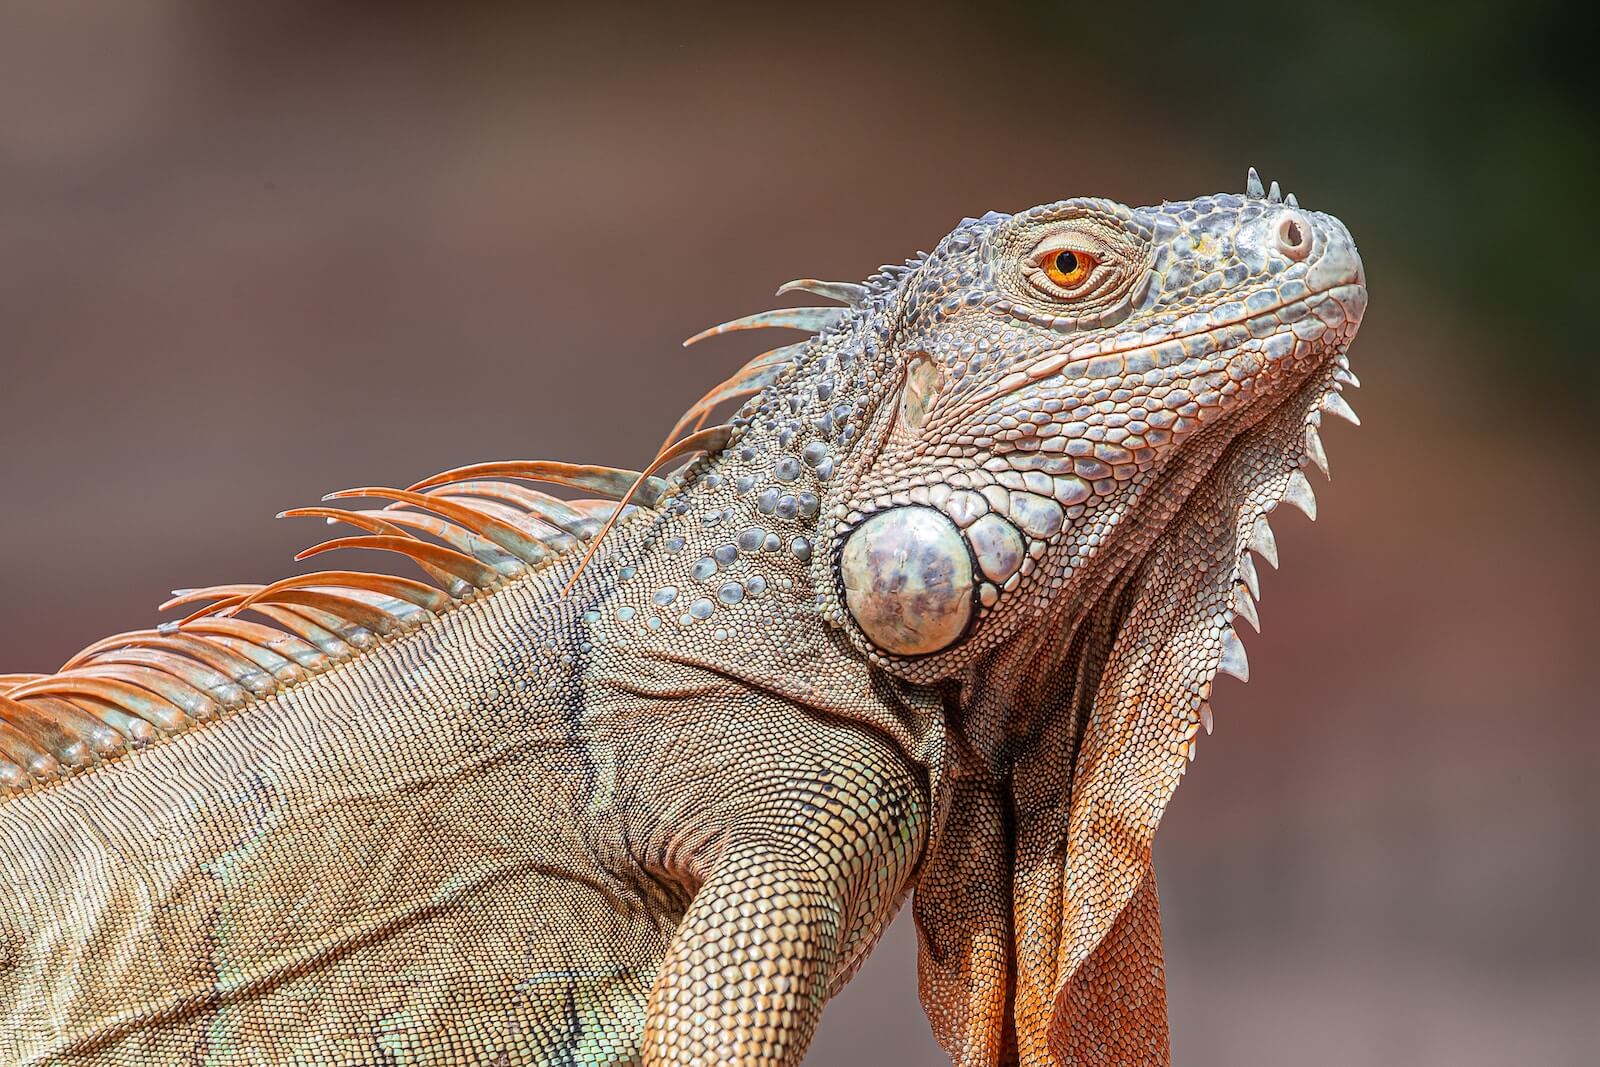 photo of an iguana